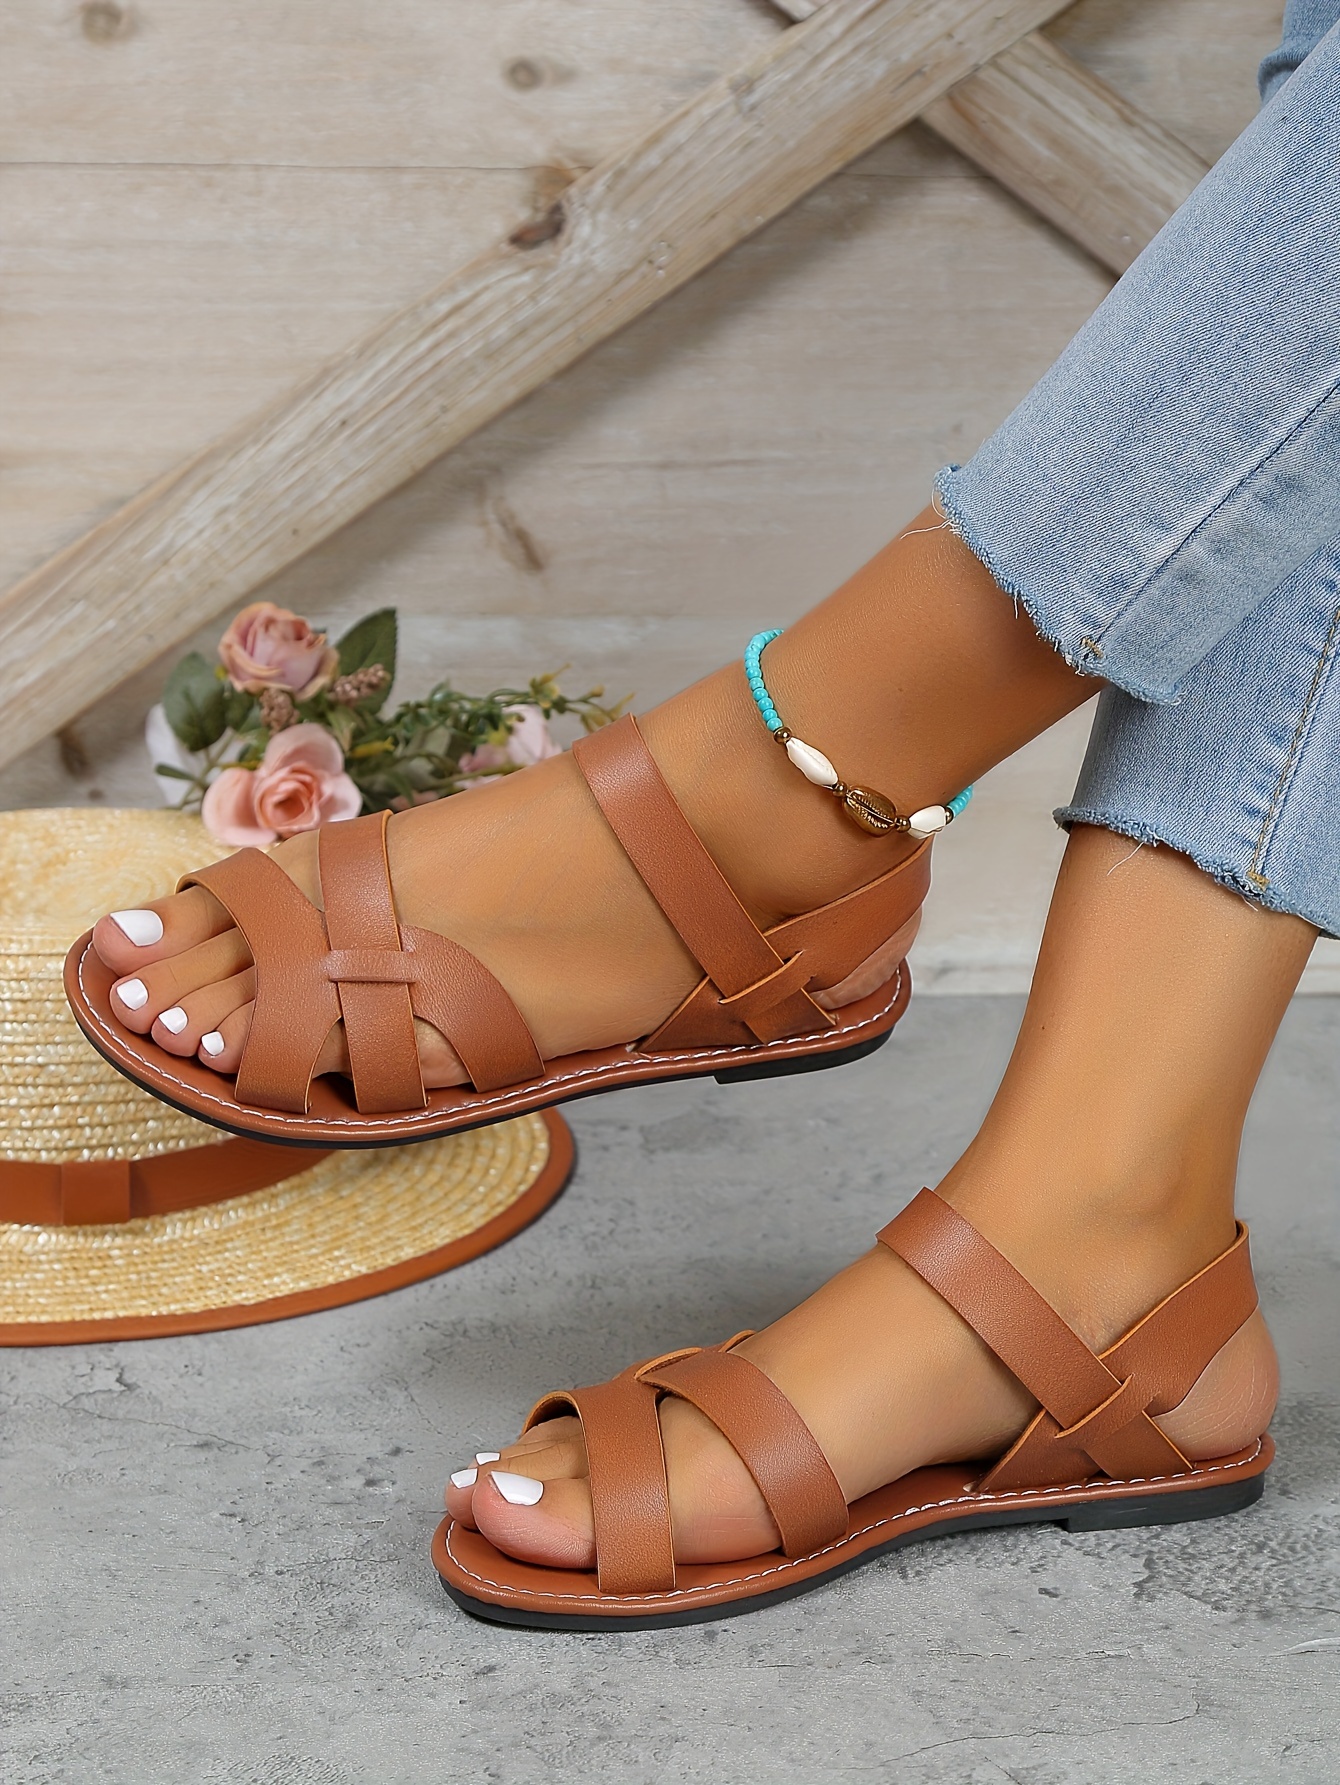 women s flat sandals casual open toe summer shoes details 7